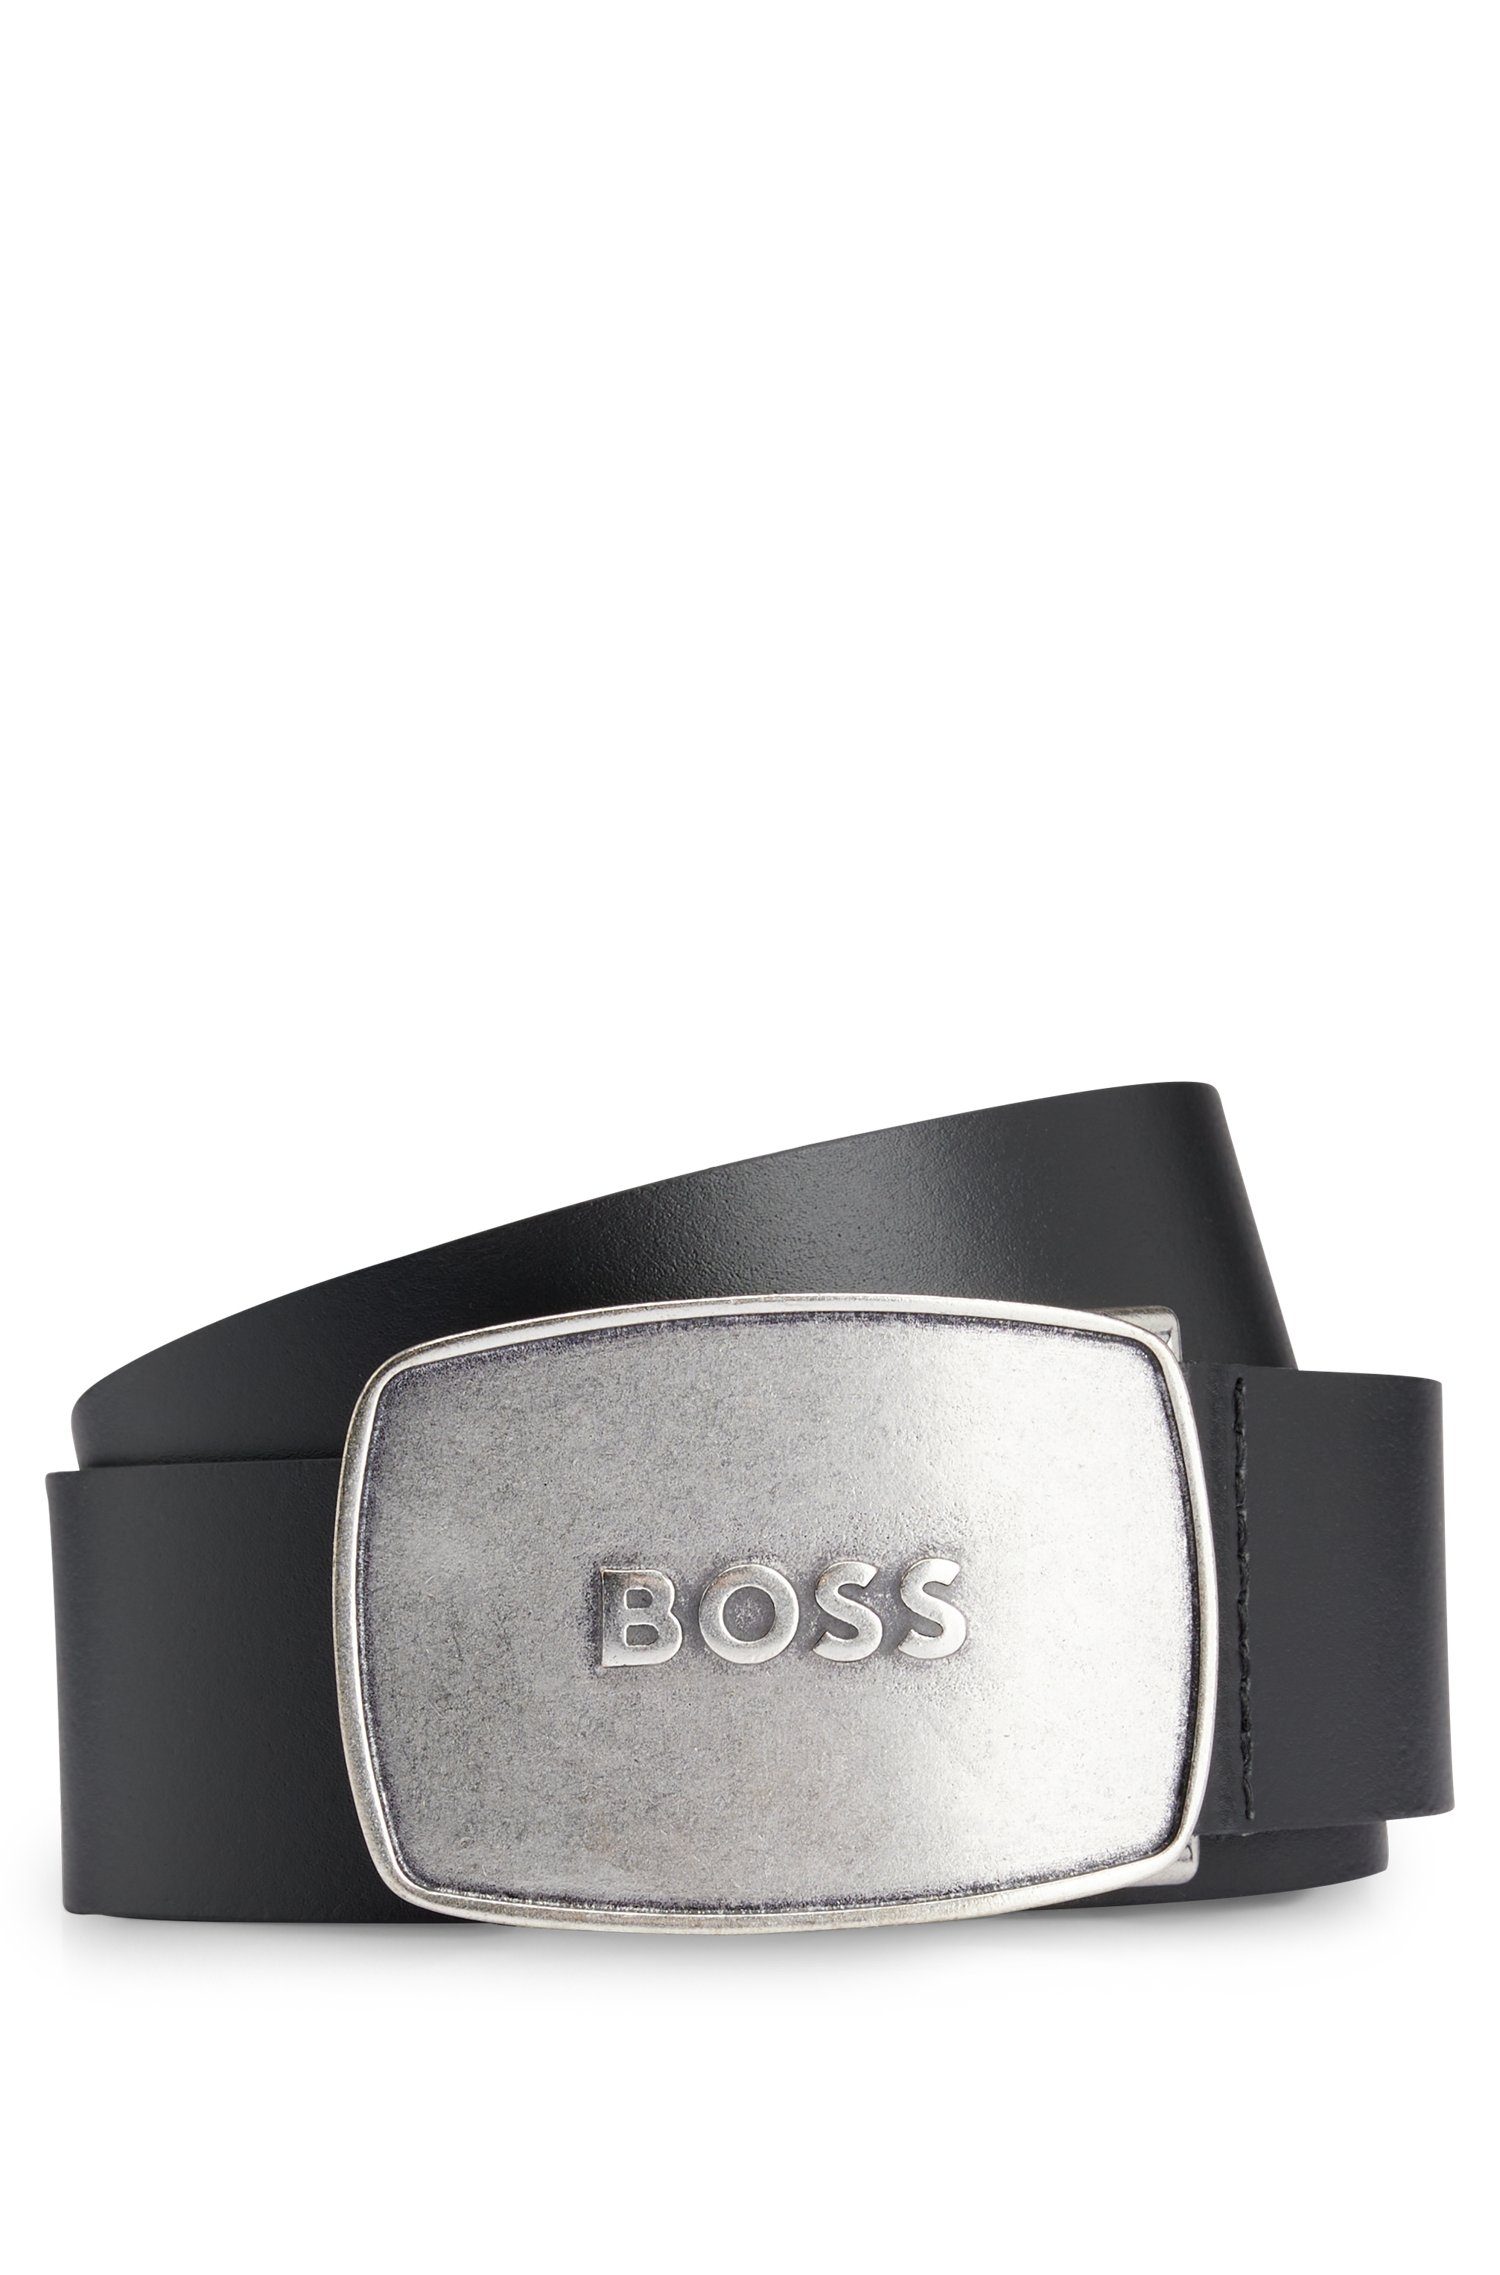 Metall Ledergürtel Boss_Icon-EP_Sz40 auffälliger BOSS aus Logo-Schnalle mit